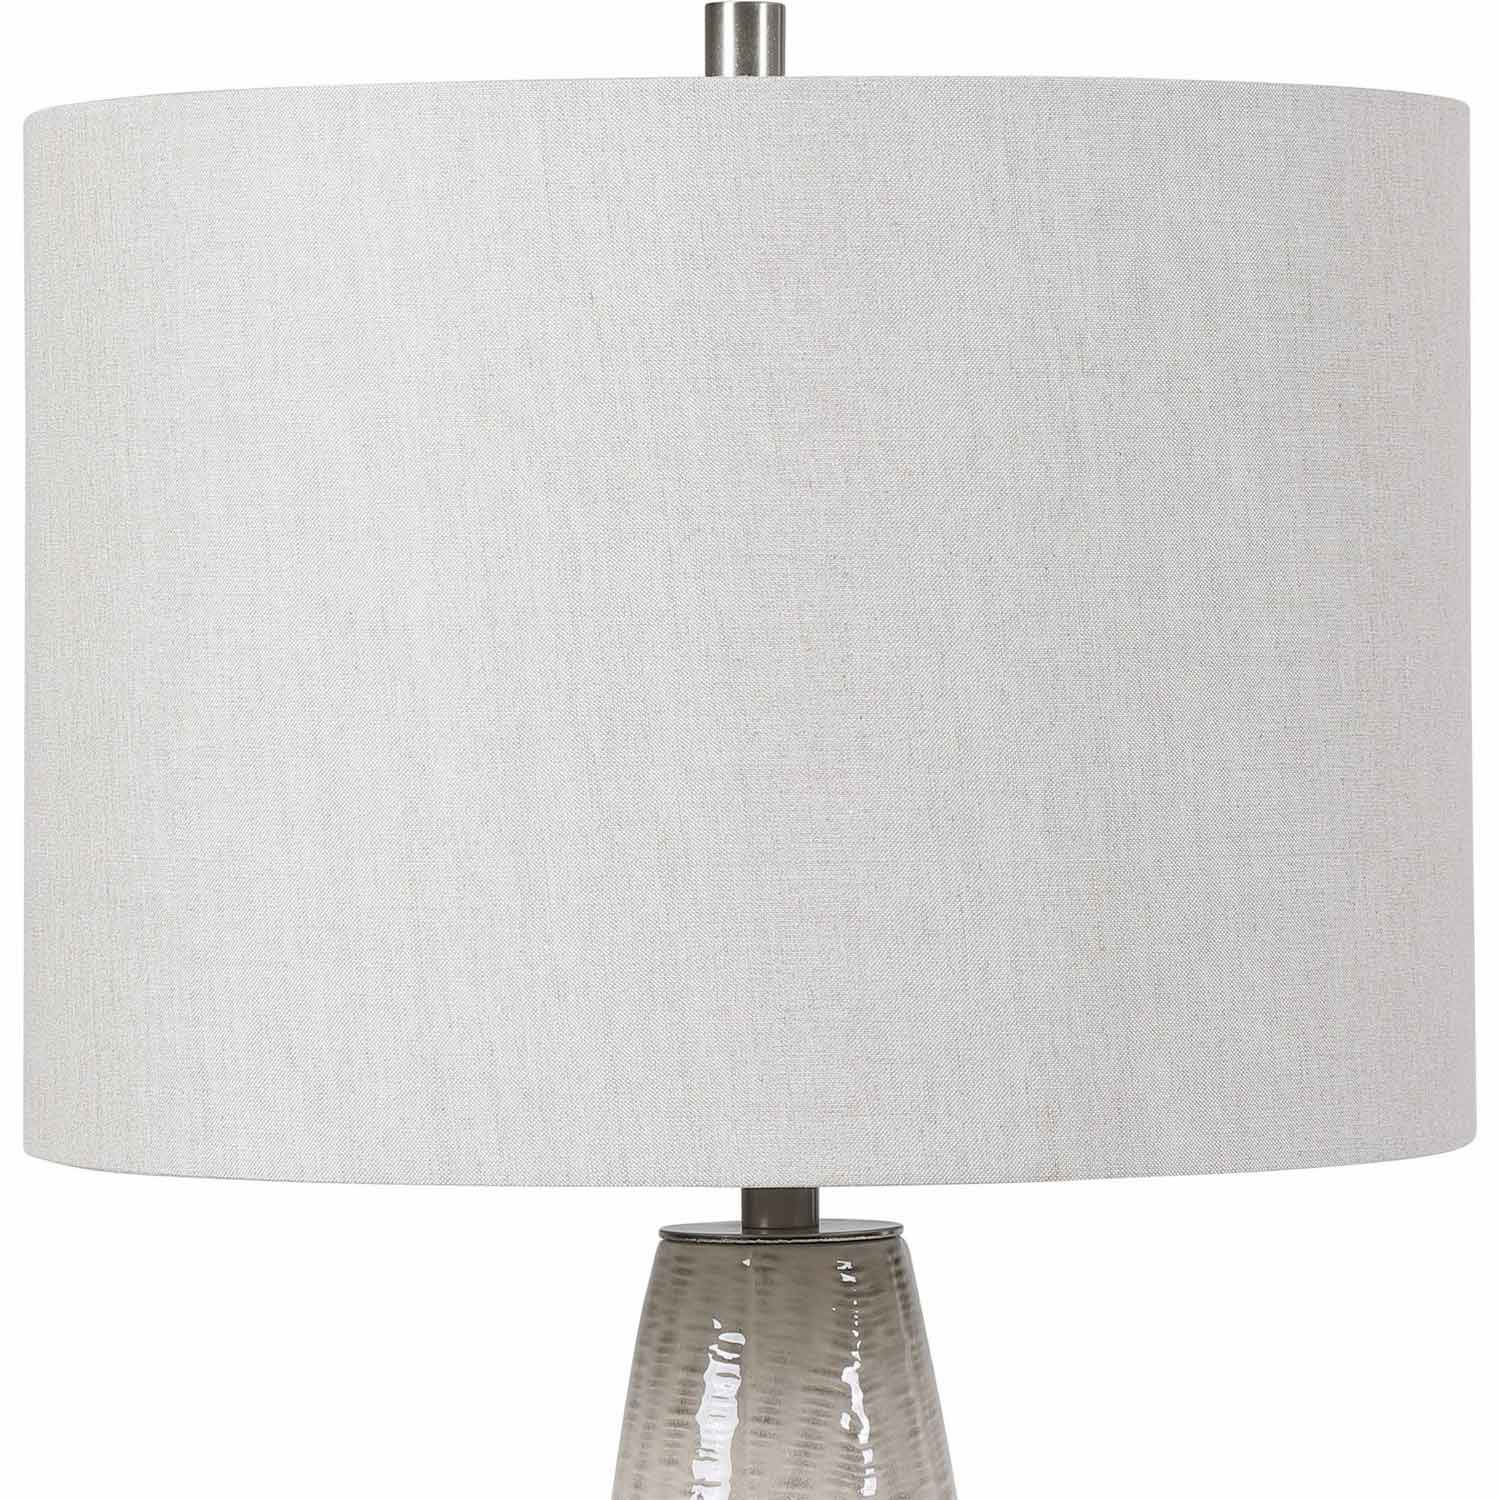 Uttermost Delgado Table Lamp - Light Gray